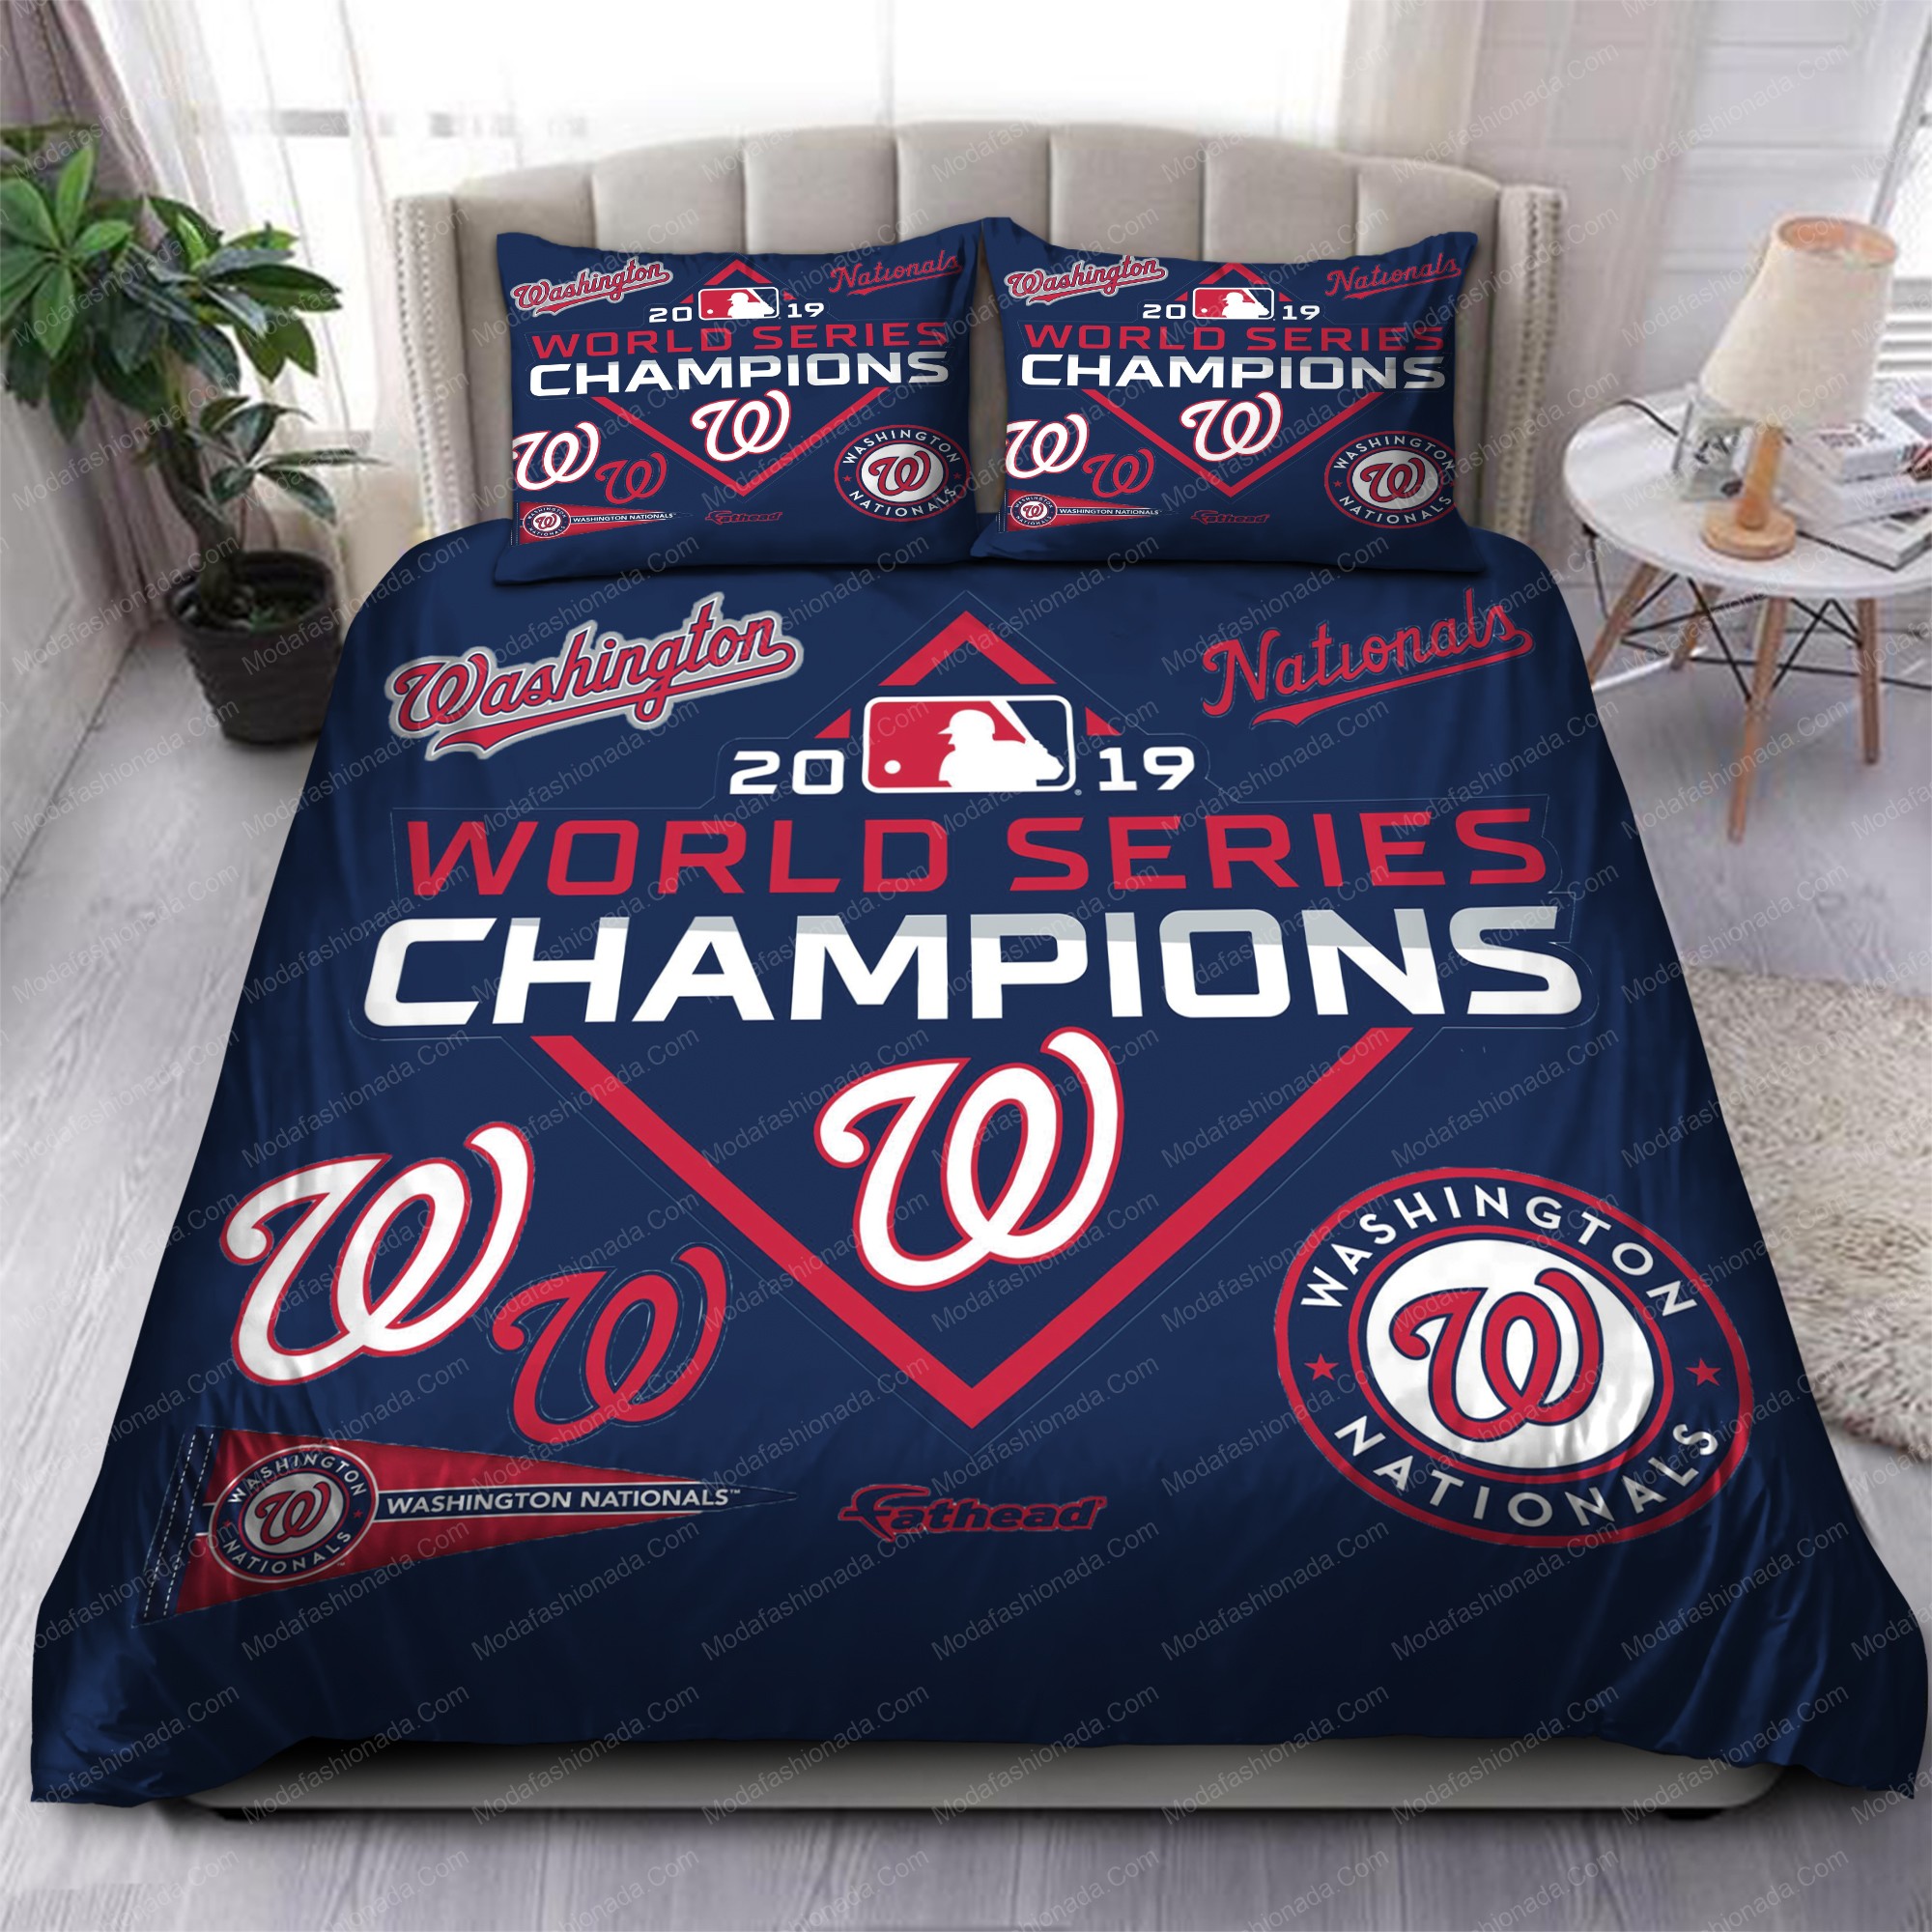 World Series Championships 2019 Washington Nationals Mlb 190 Logo Type 1279 Bedding Sets Sporty Bedroom Home Decor